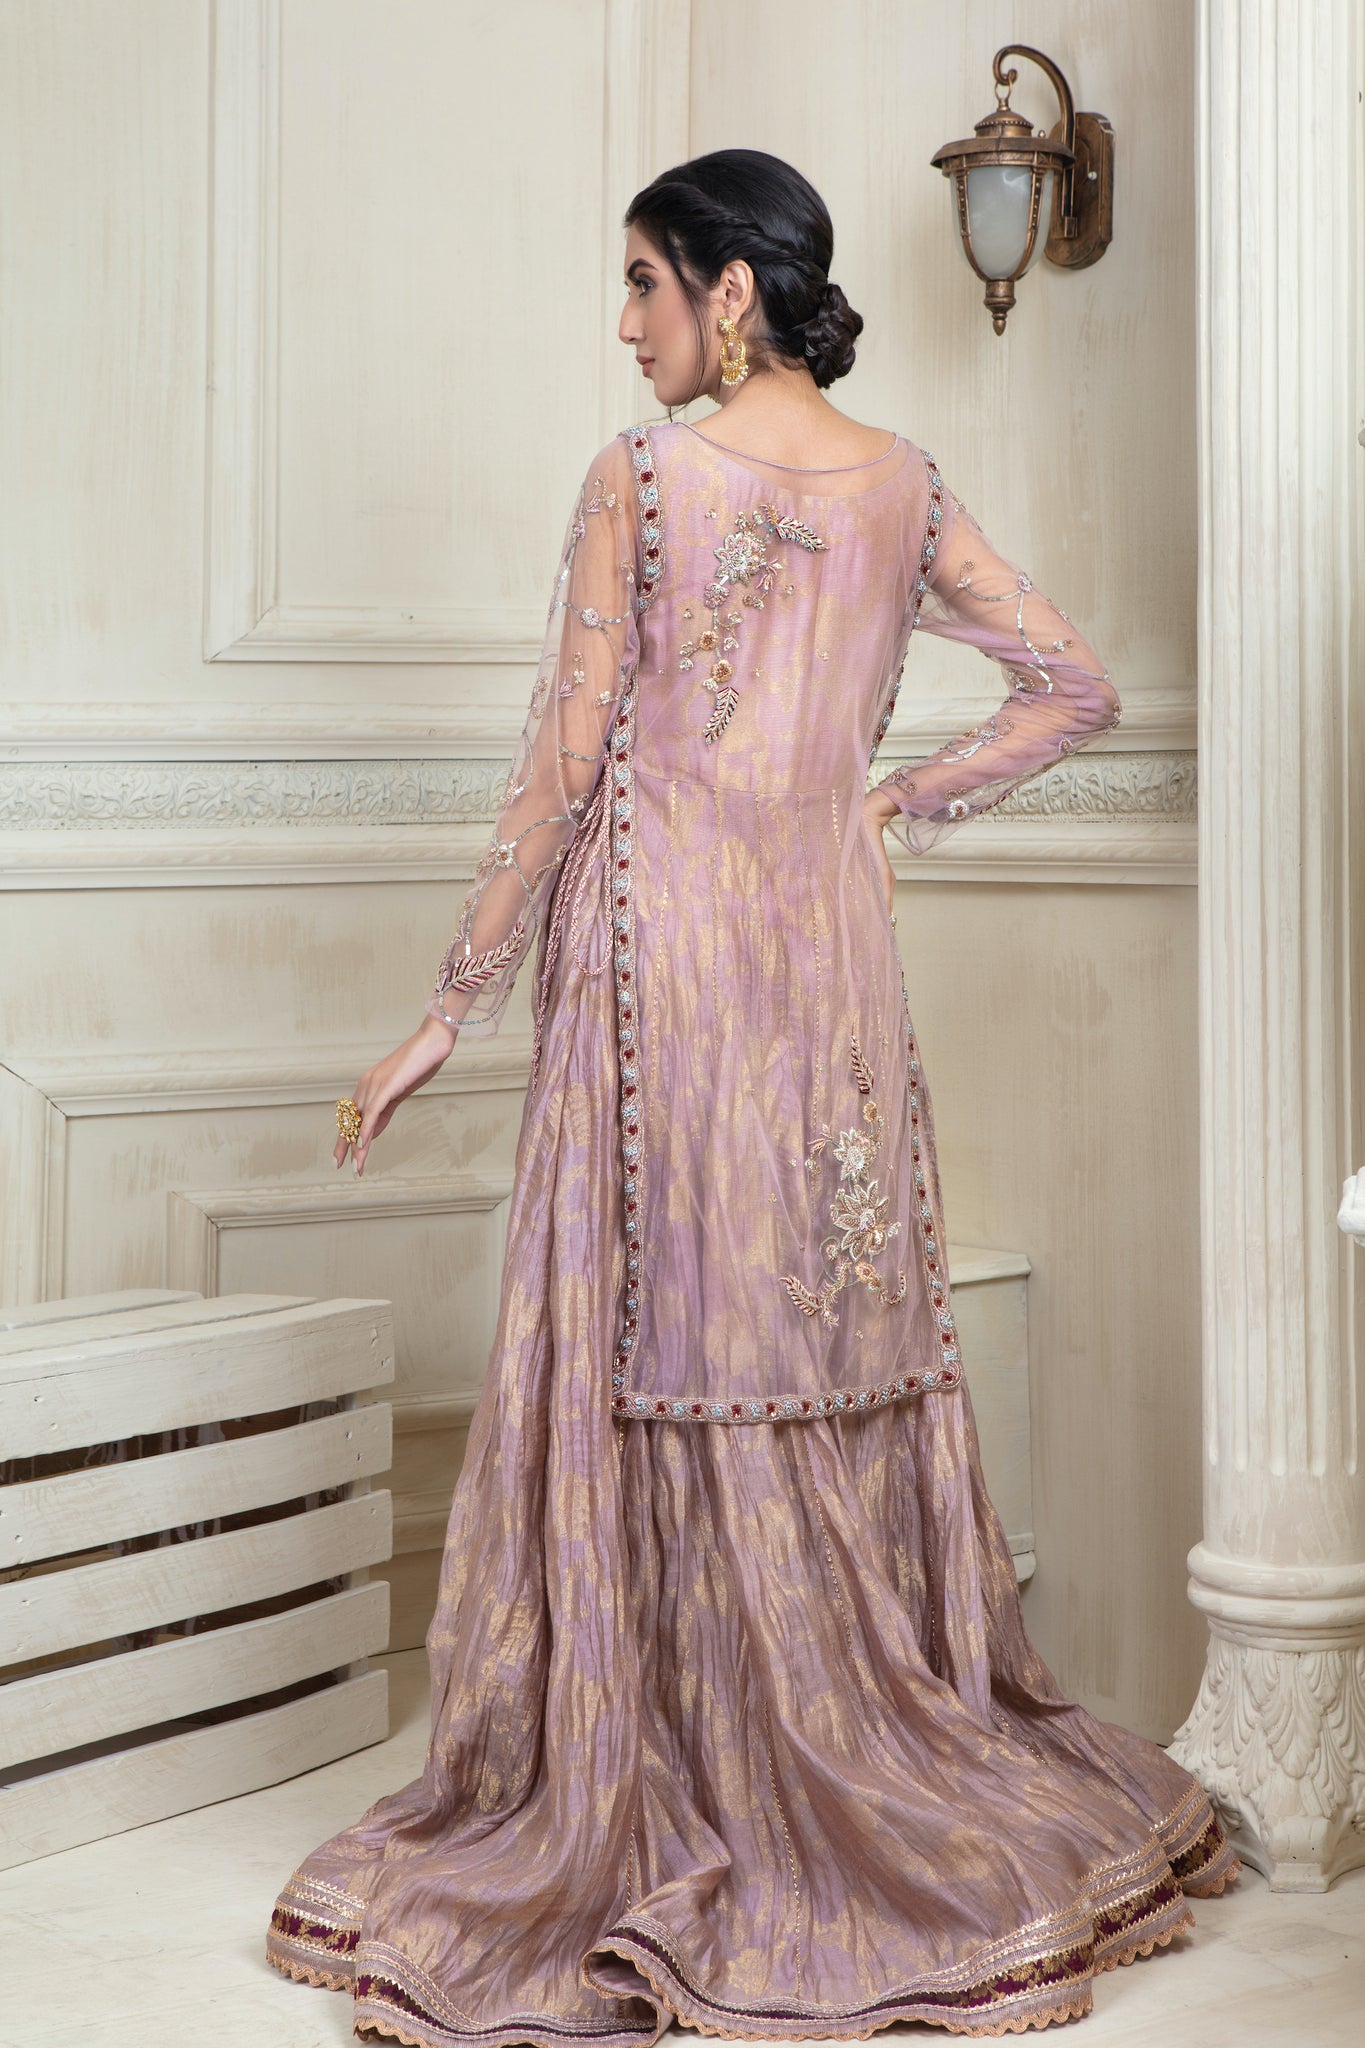 Ballerina | Pakistani Designer Outfit | Sarosh Salman